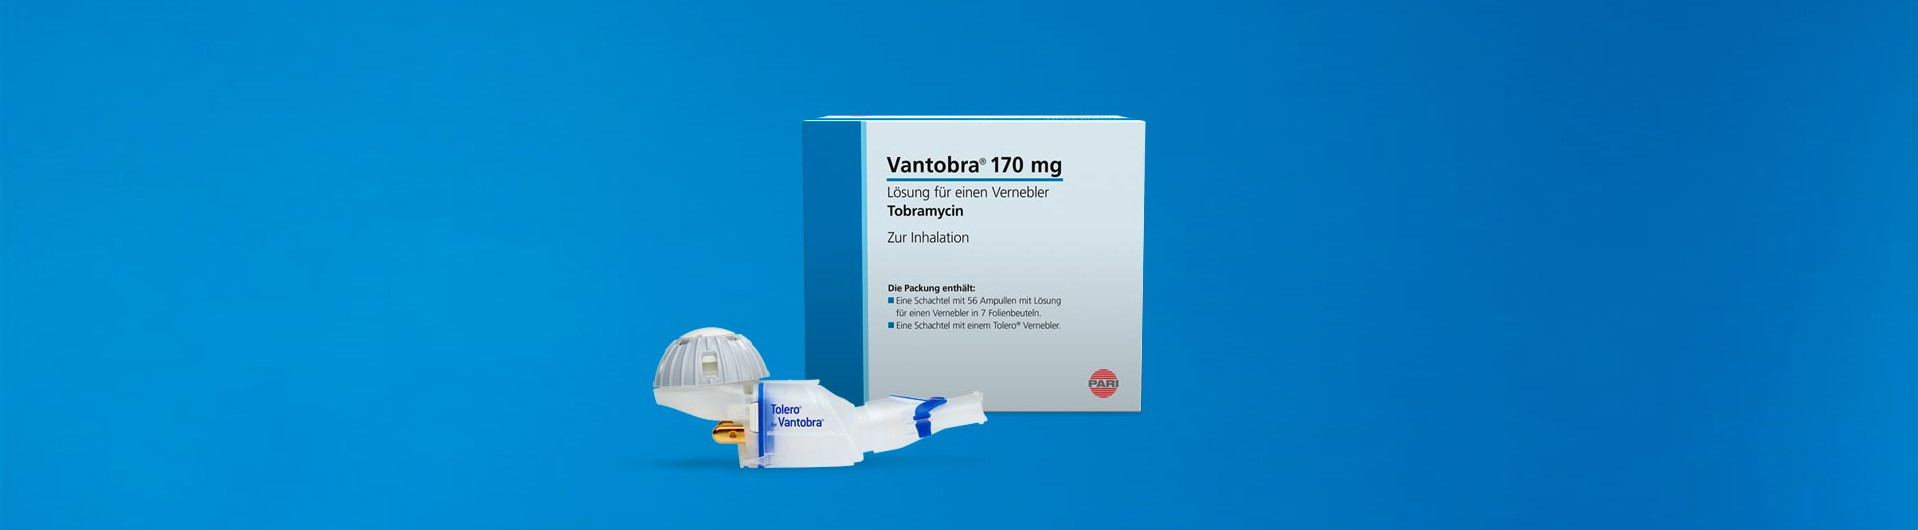 Vantobra® 170 mg